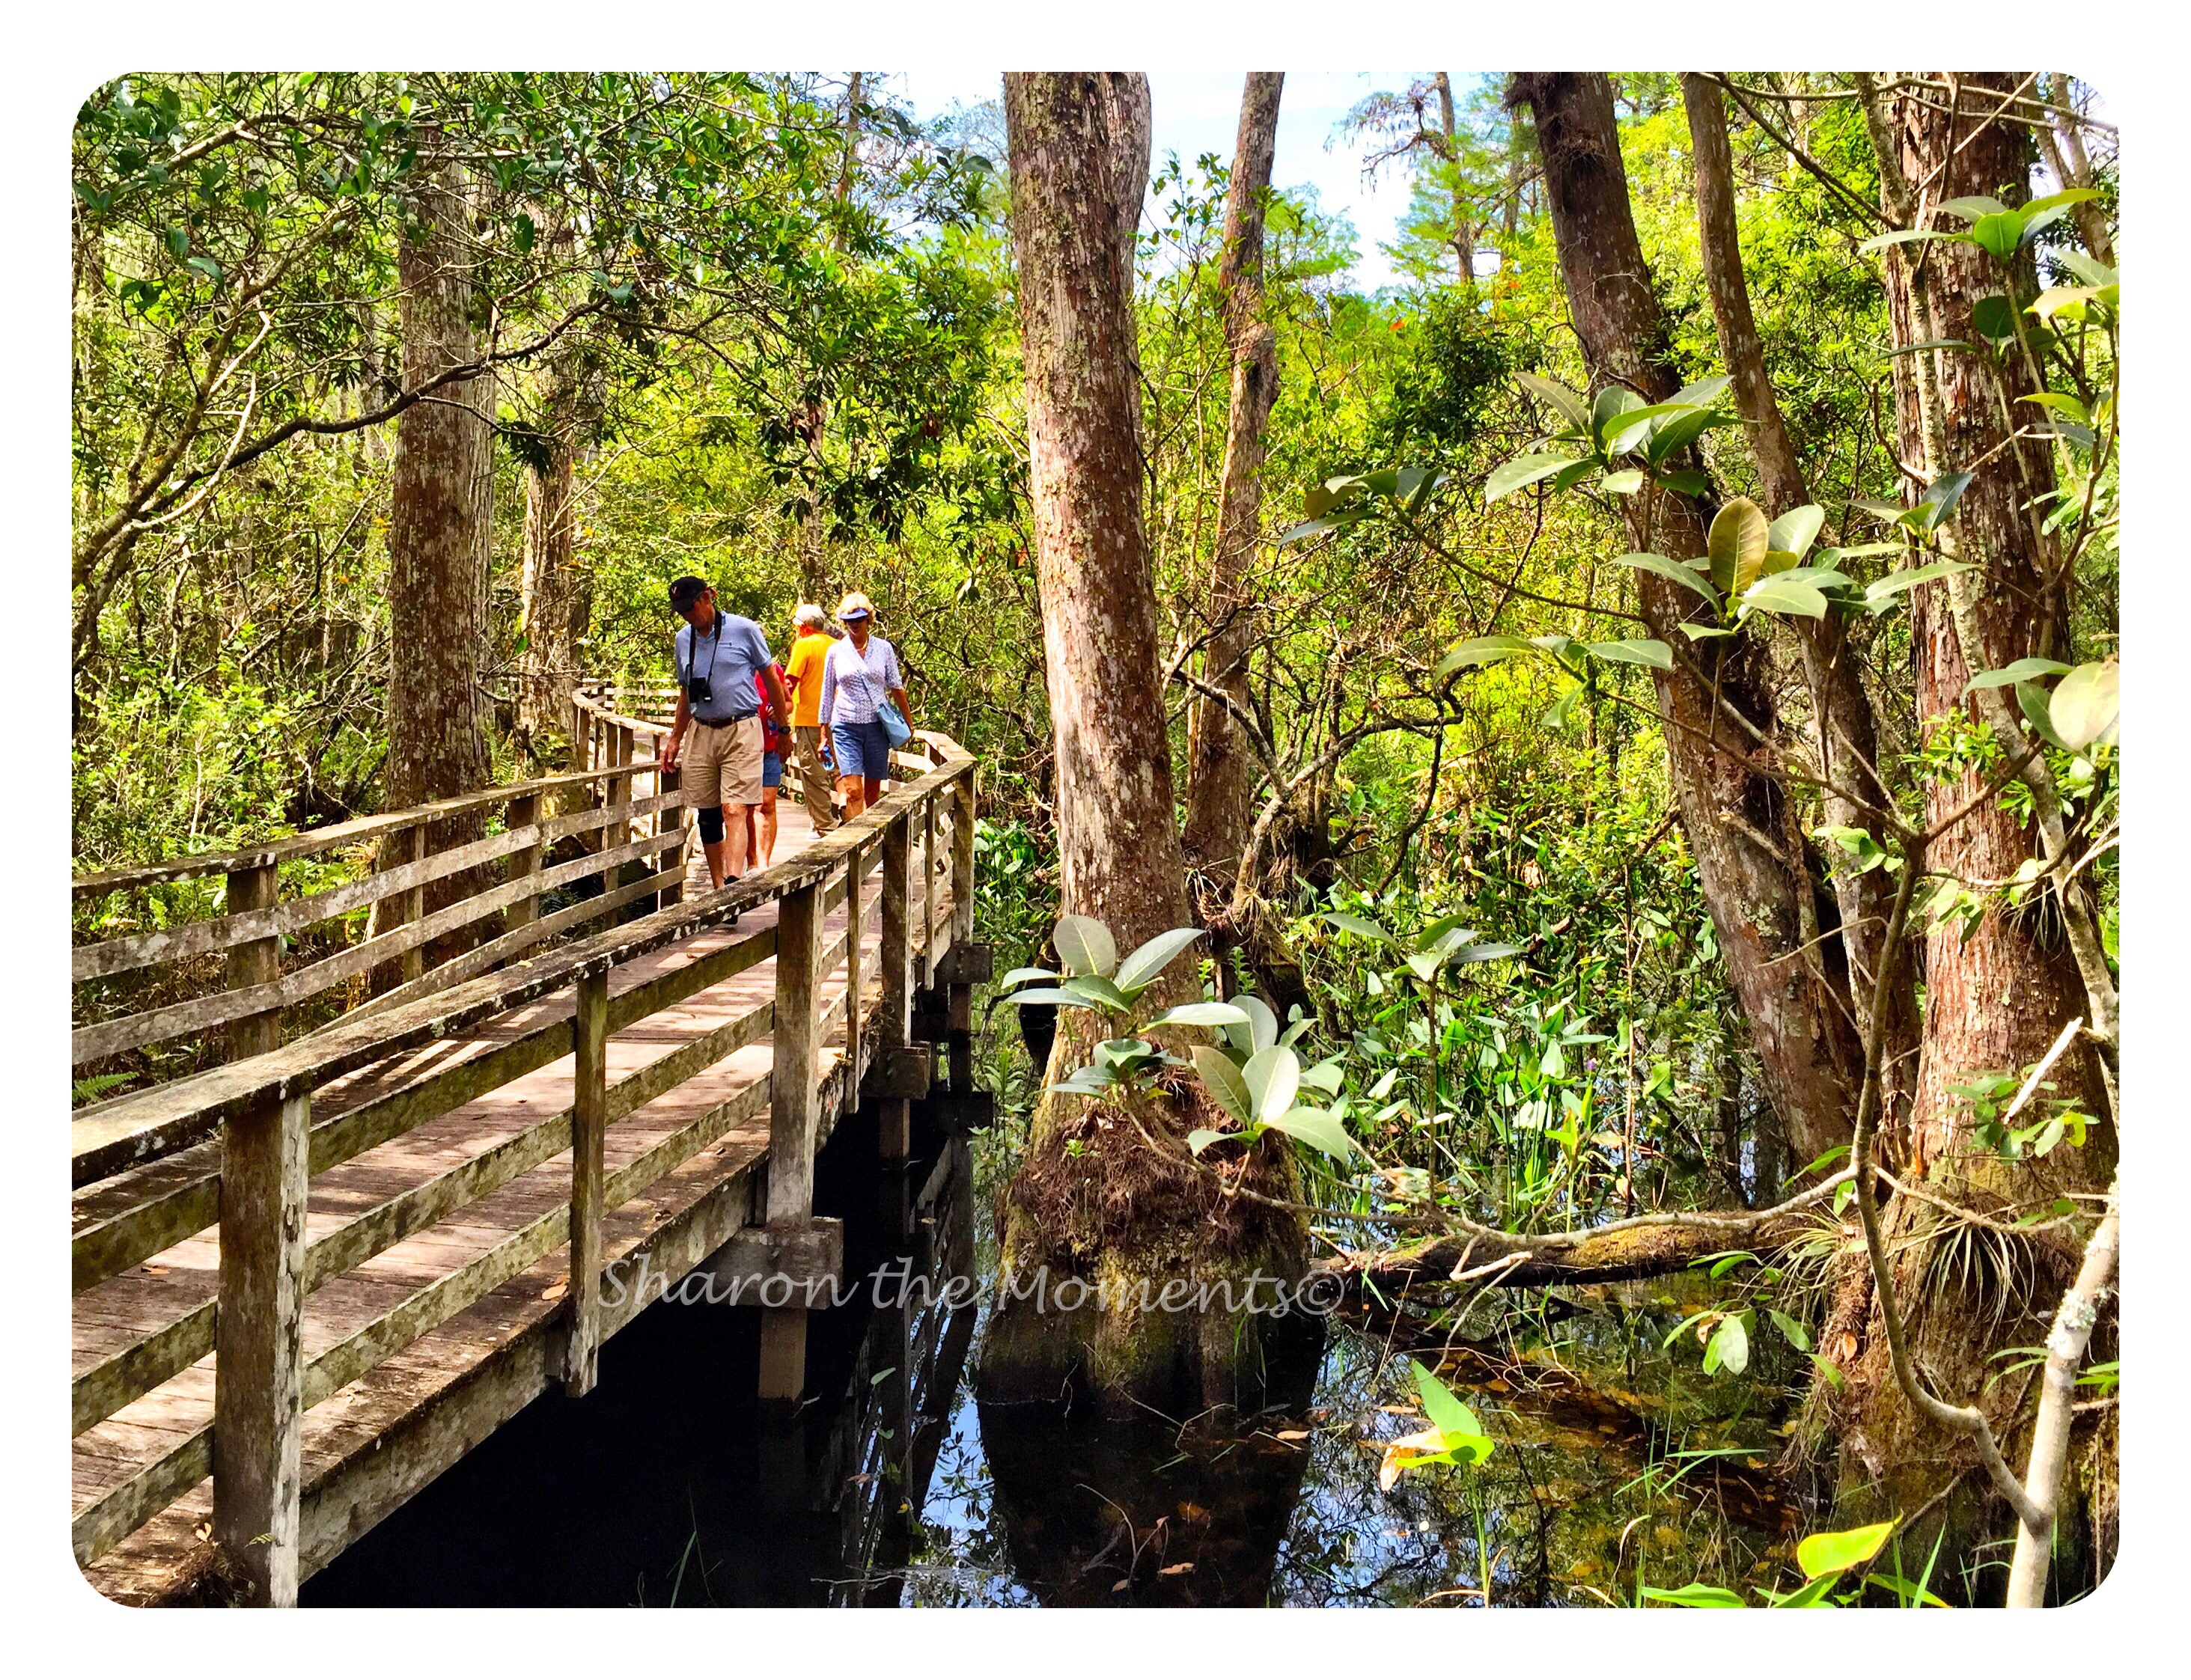 Corkscrew Swamp Sanctuary in SW Florida ||Sharon the Moments Blog